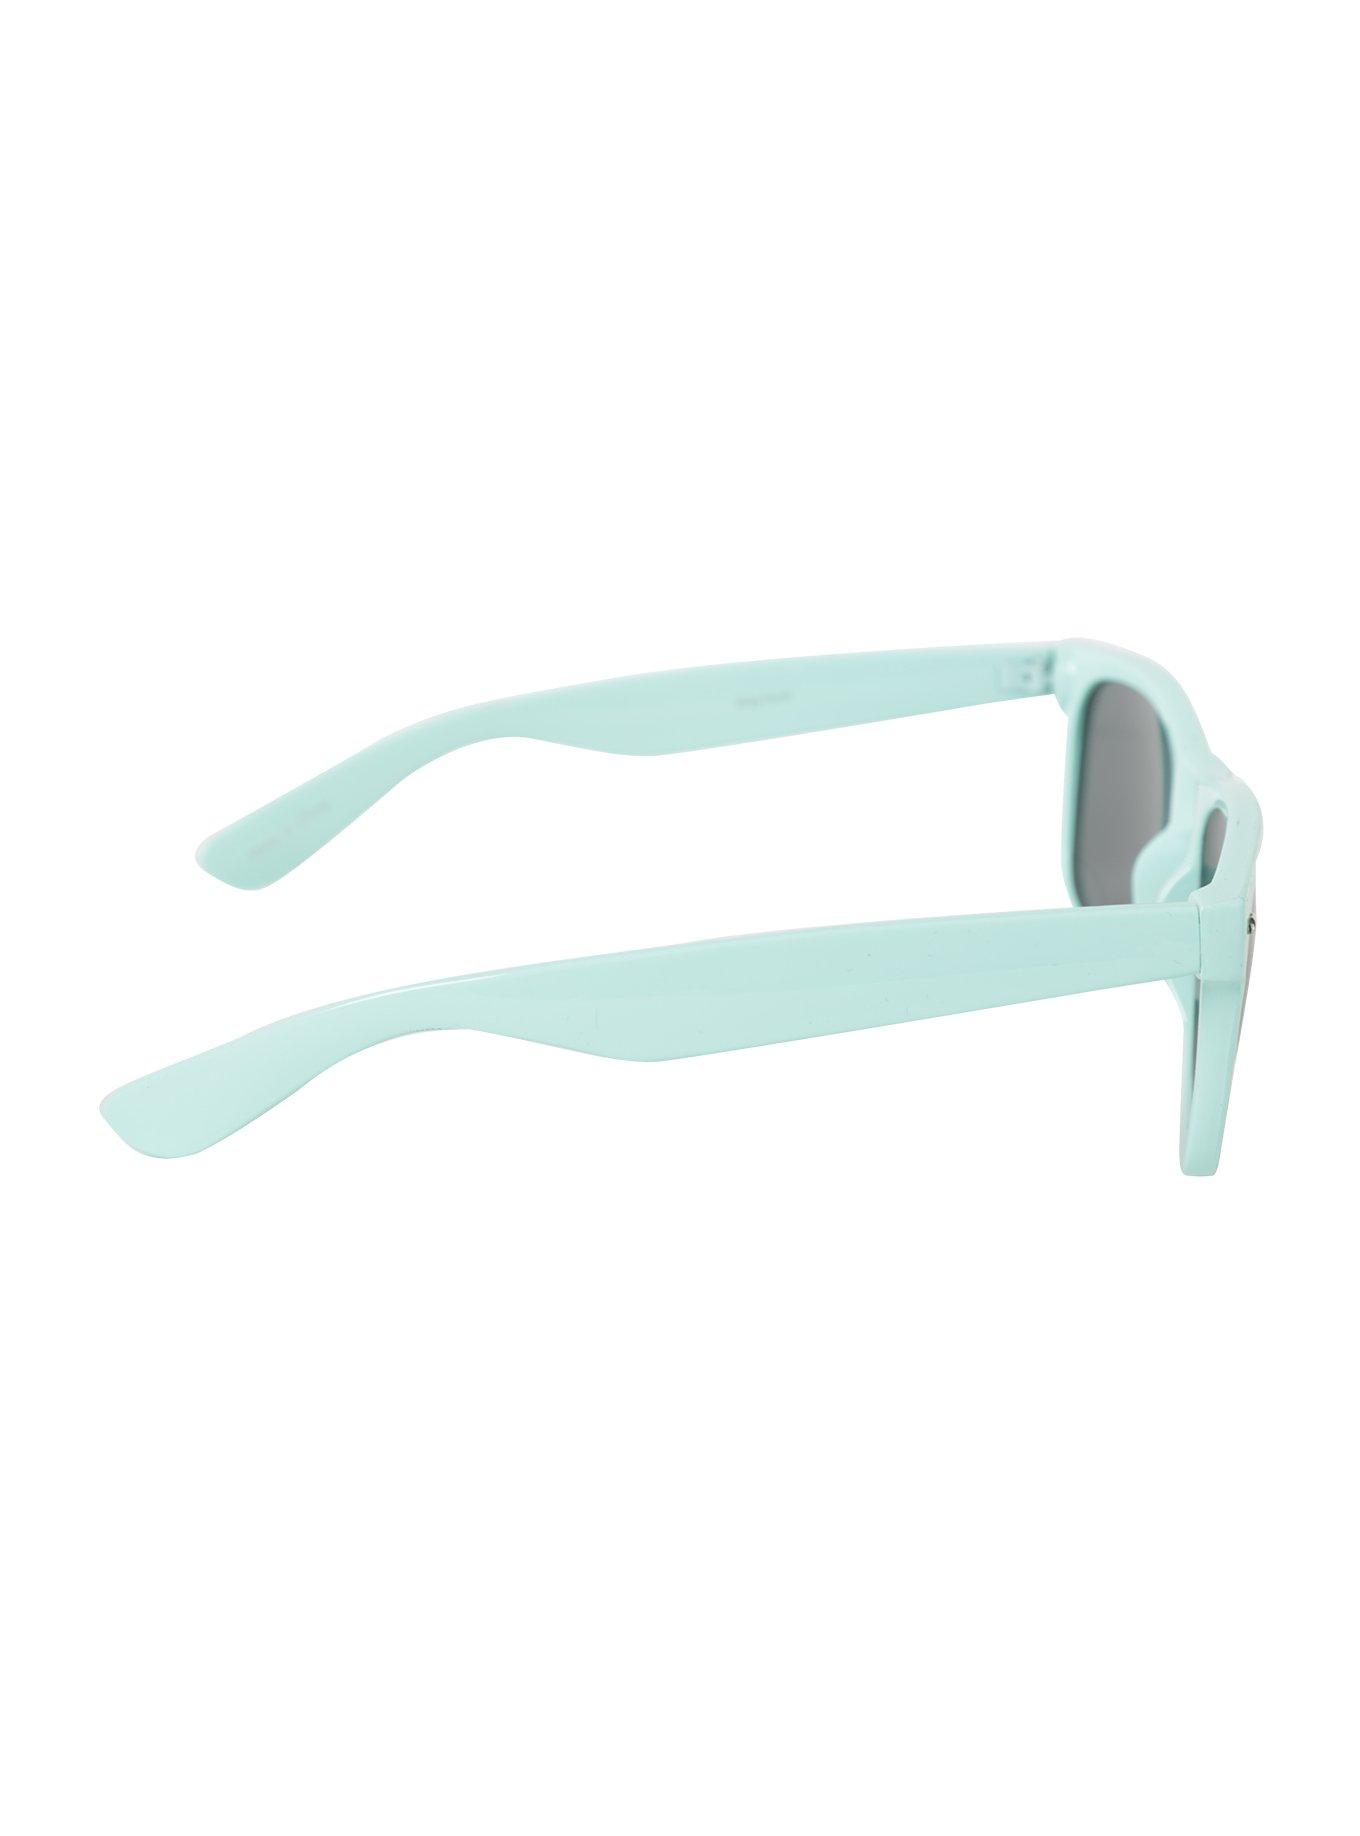 Mint Smoke Lens Retro Sunglasses, , alternate